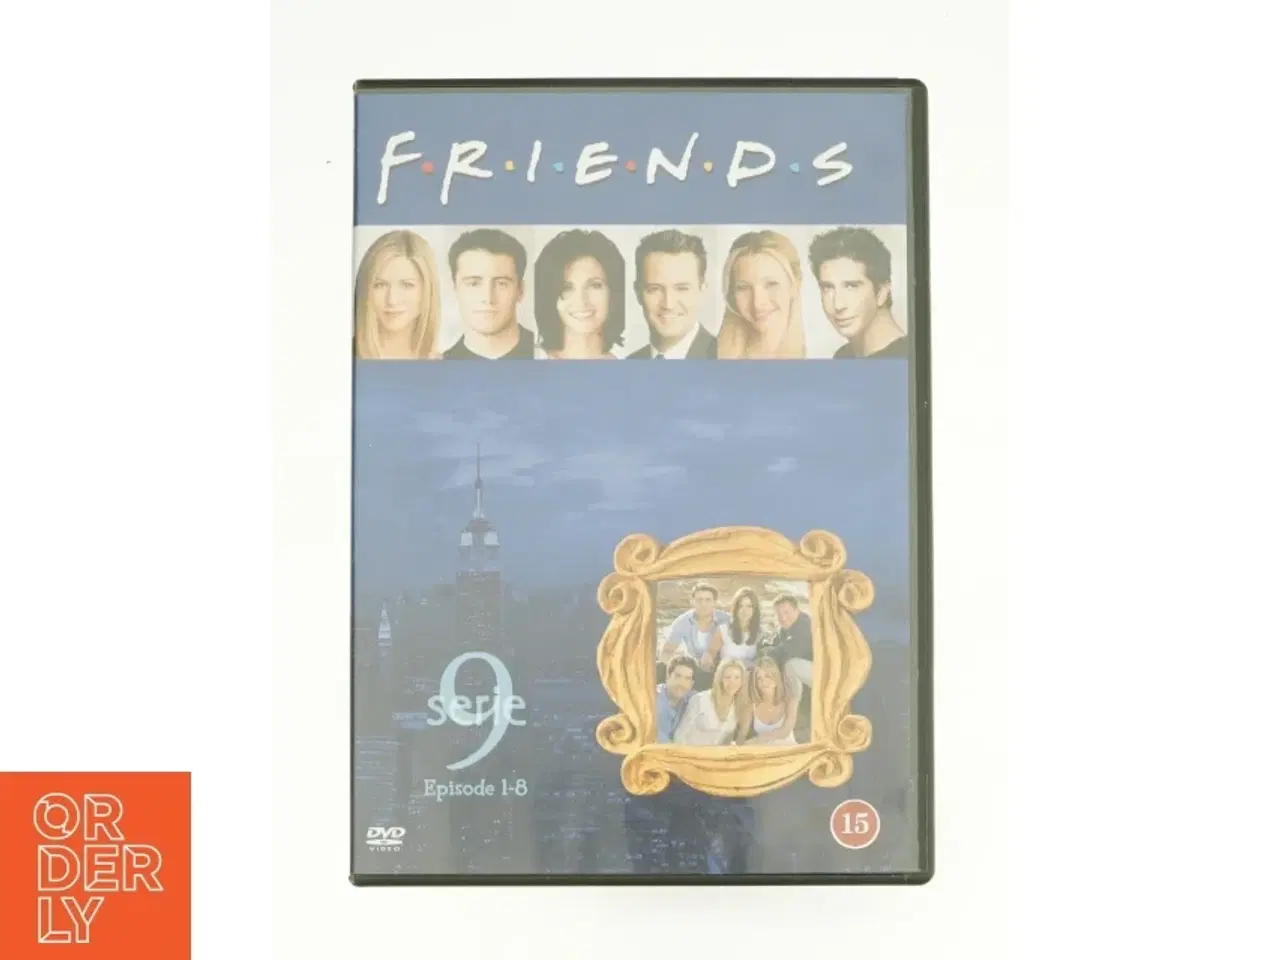 Billede 1 - Friends: Season 9 Episodes 1-8                            <span class="label label-blank pull-right">Standard edition</span> fra DVD